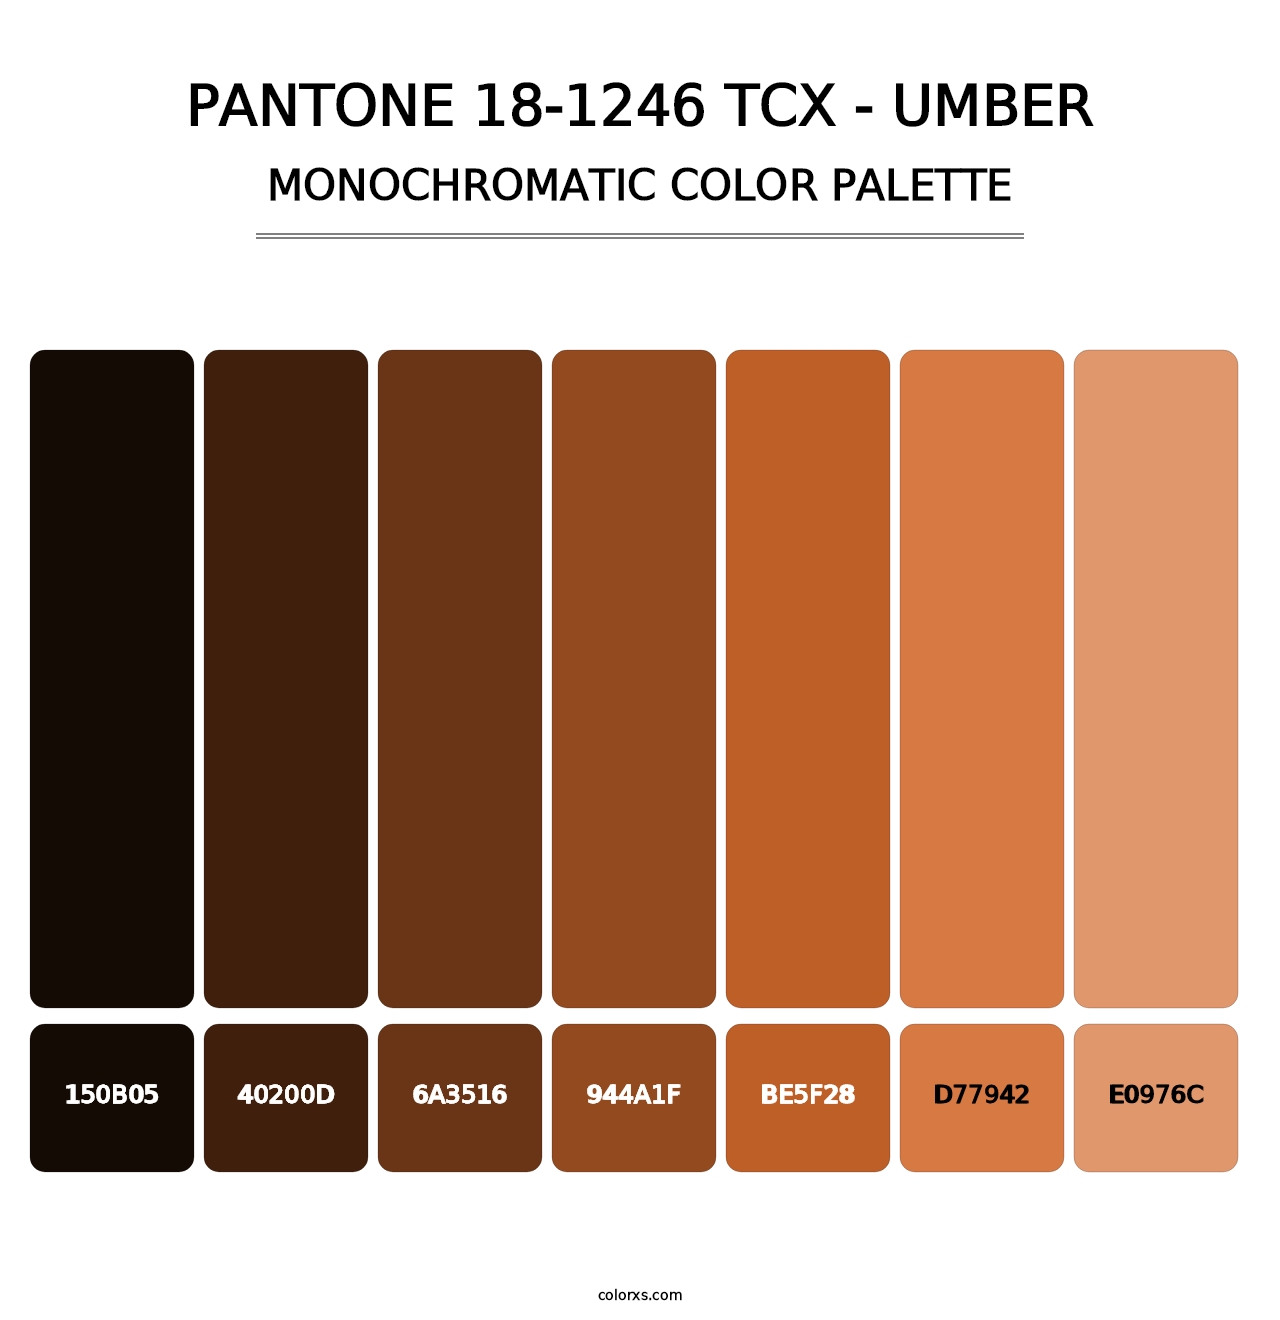 PANTONE 18-1246 TCX - Umber - Monochromatic Color Palette